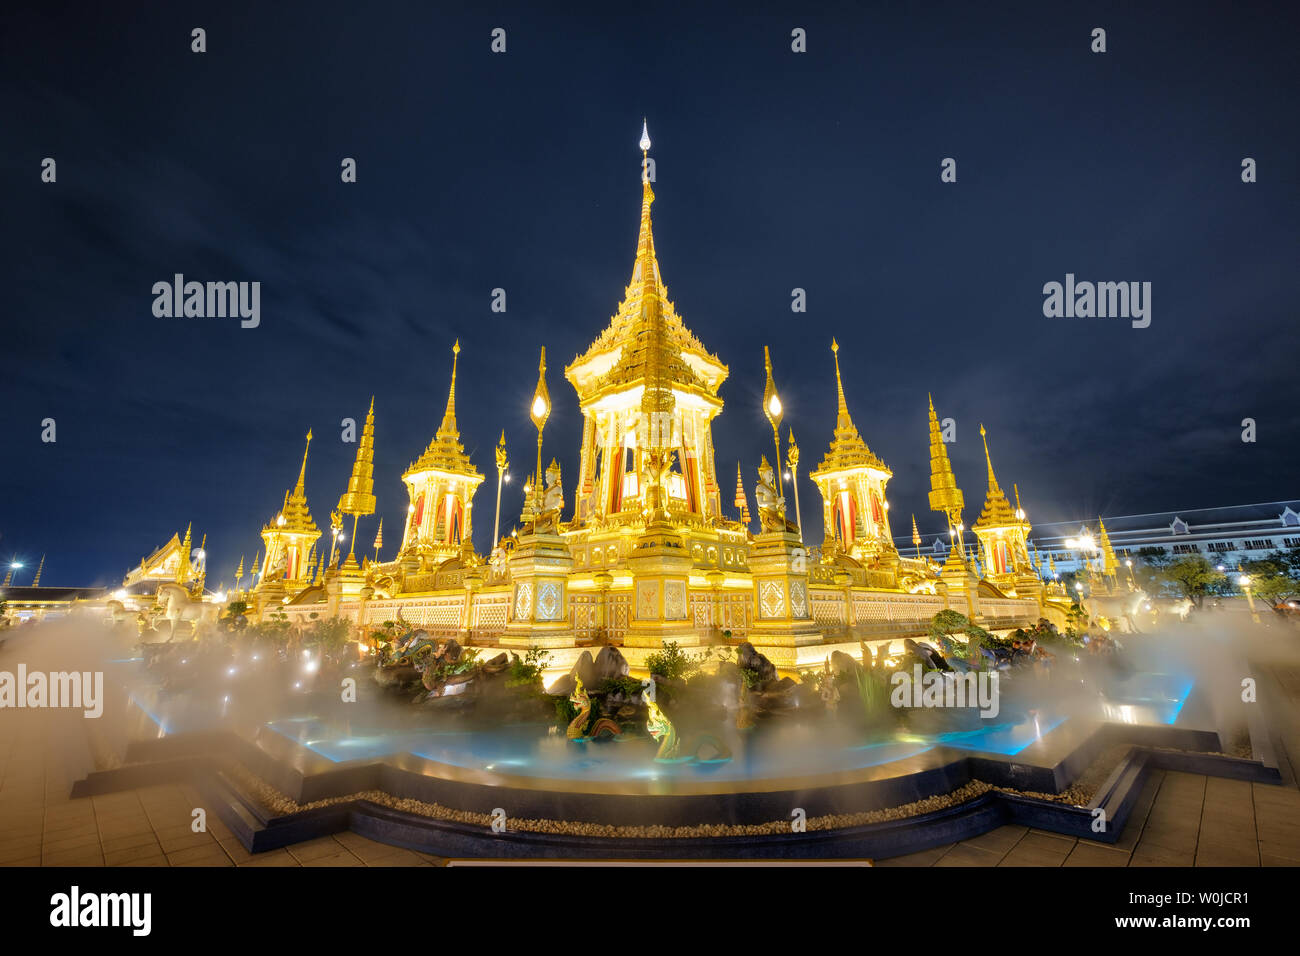 Bangkok, Thailand - Nov 20 2017 : The Royal Crematorium architecture for HM King Bhumibol Adulyadej at Sanam Luang at night Stock Photo